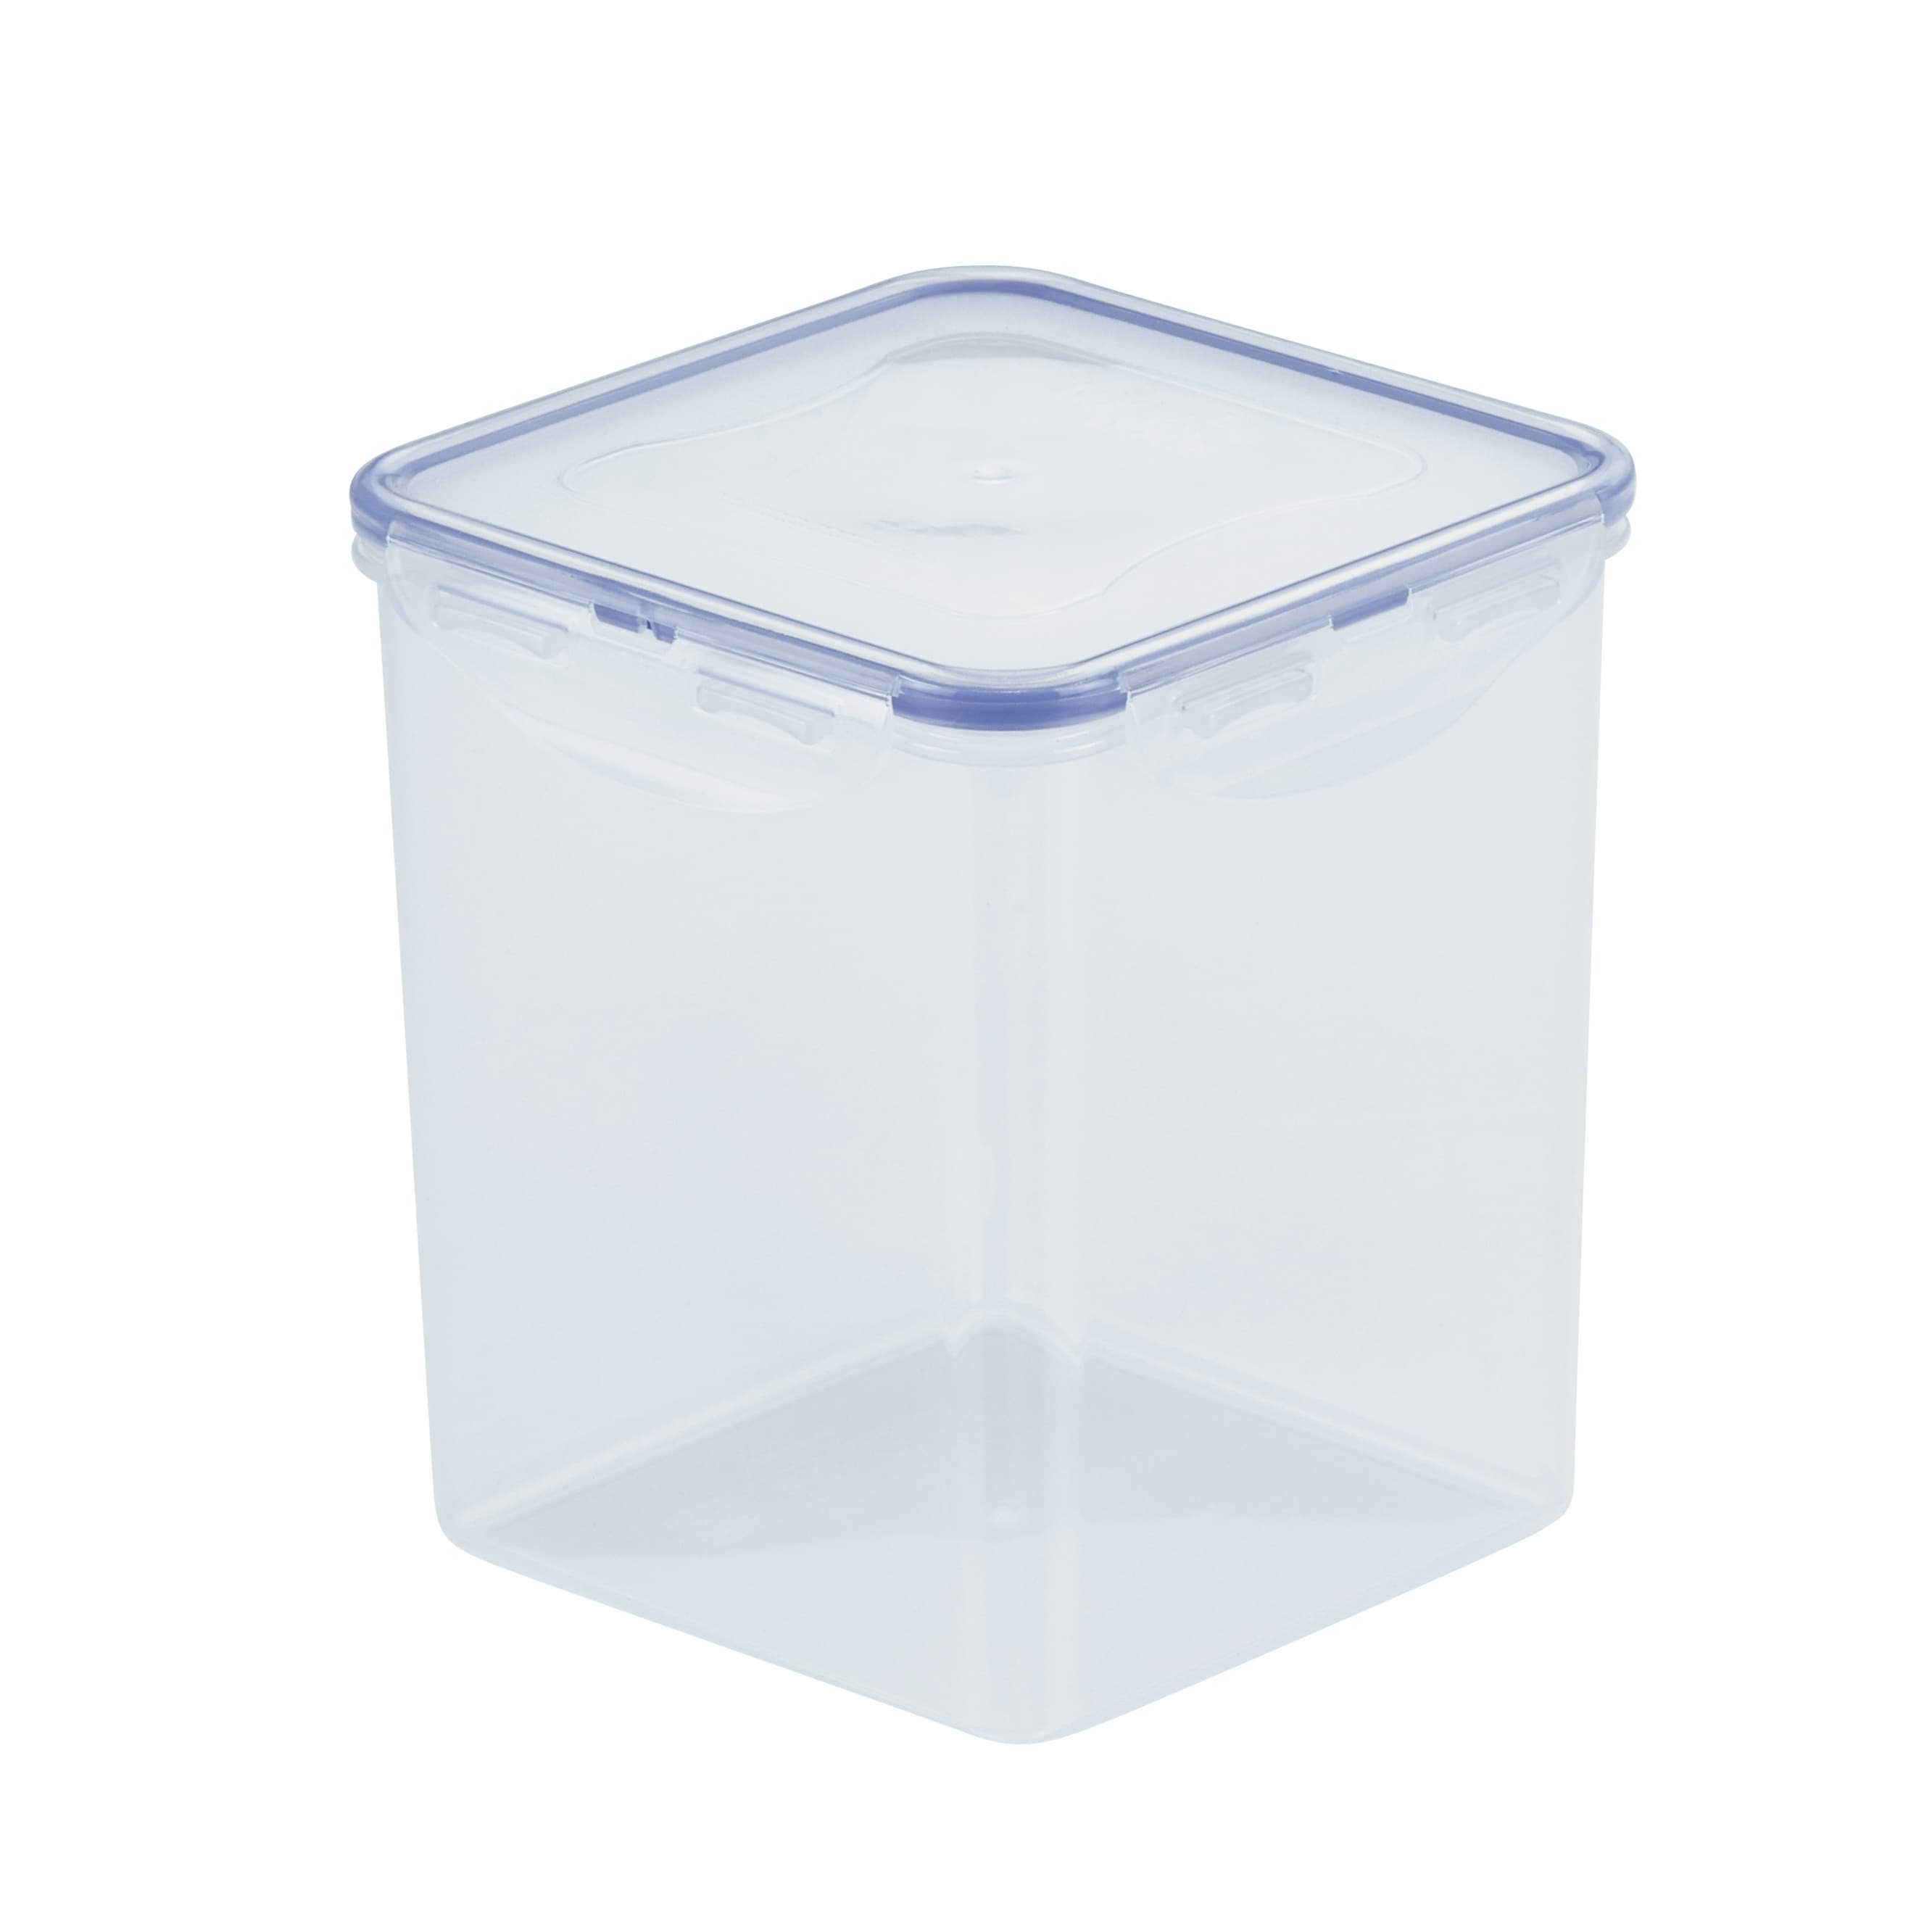 Lock & Lock Easy Essentials Pantry 5.5-Cup Rectangular Food Storage Container